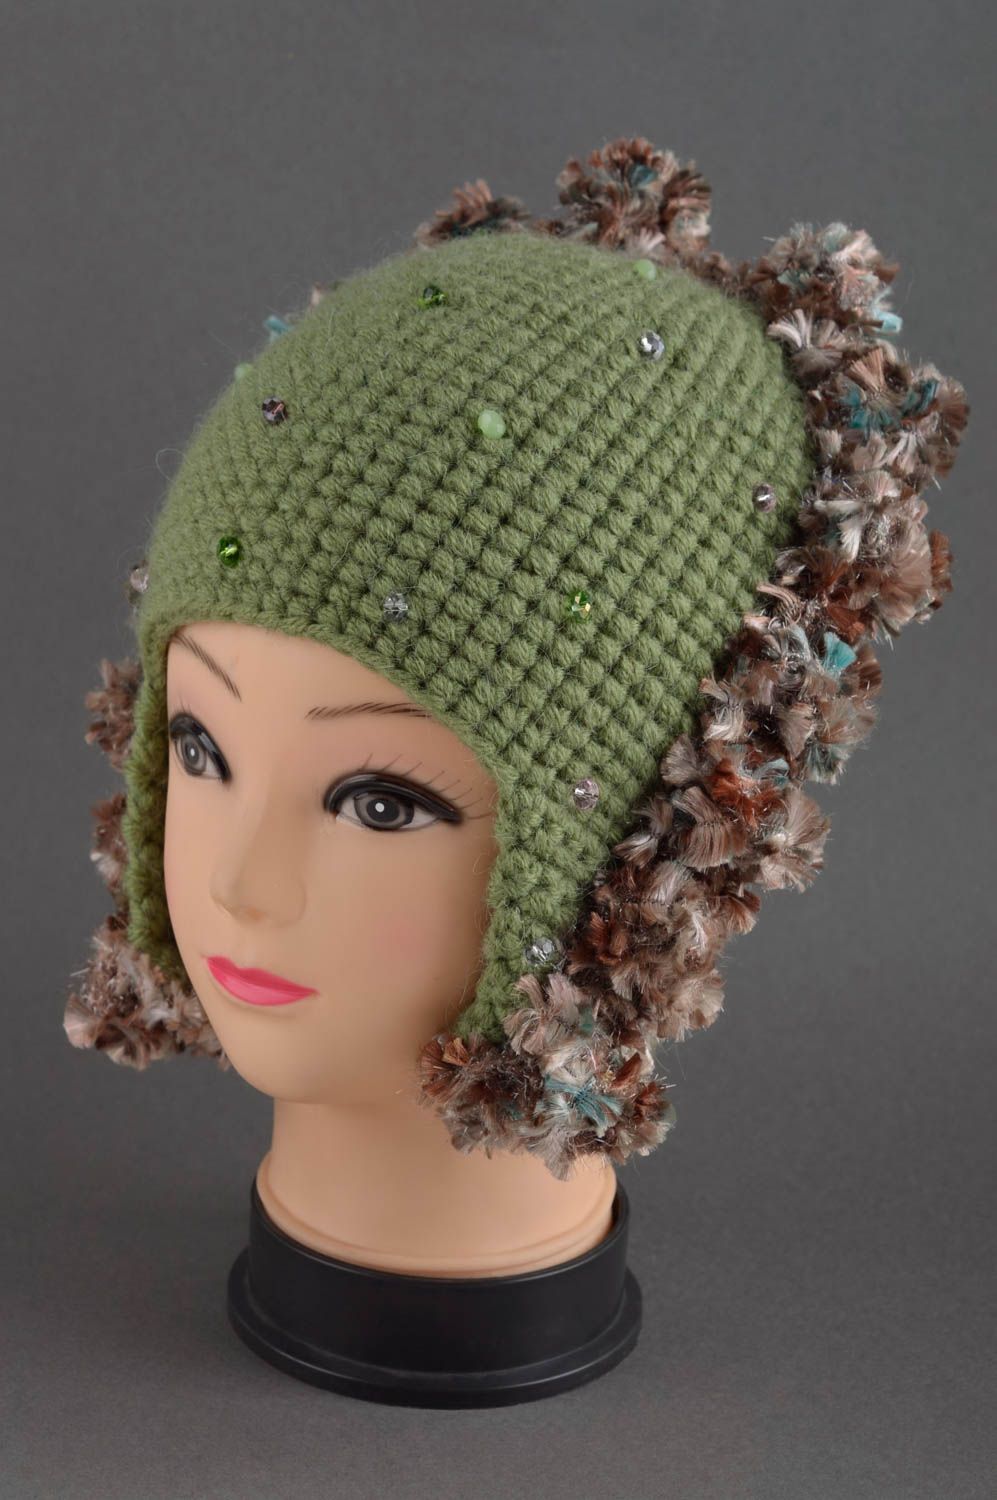 Handmade hat designer hat for girls funny hat gift ideas handmade headwear photo 1